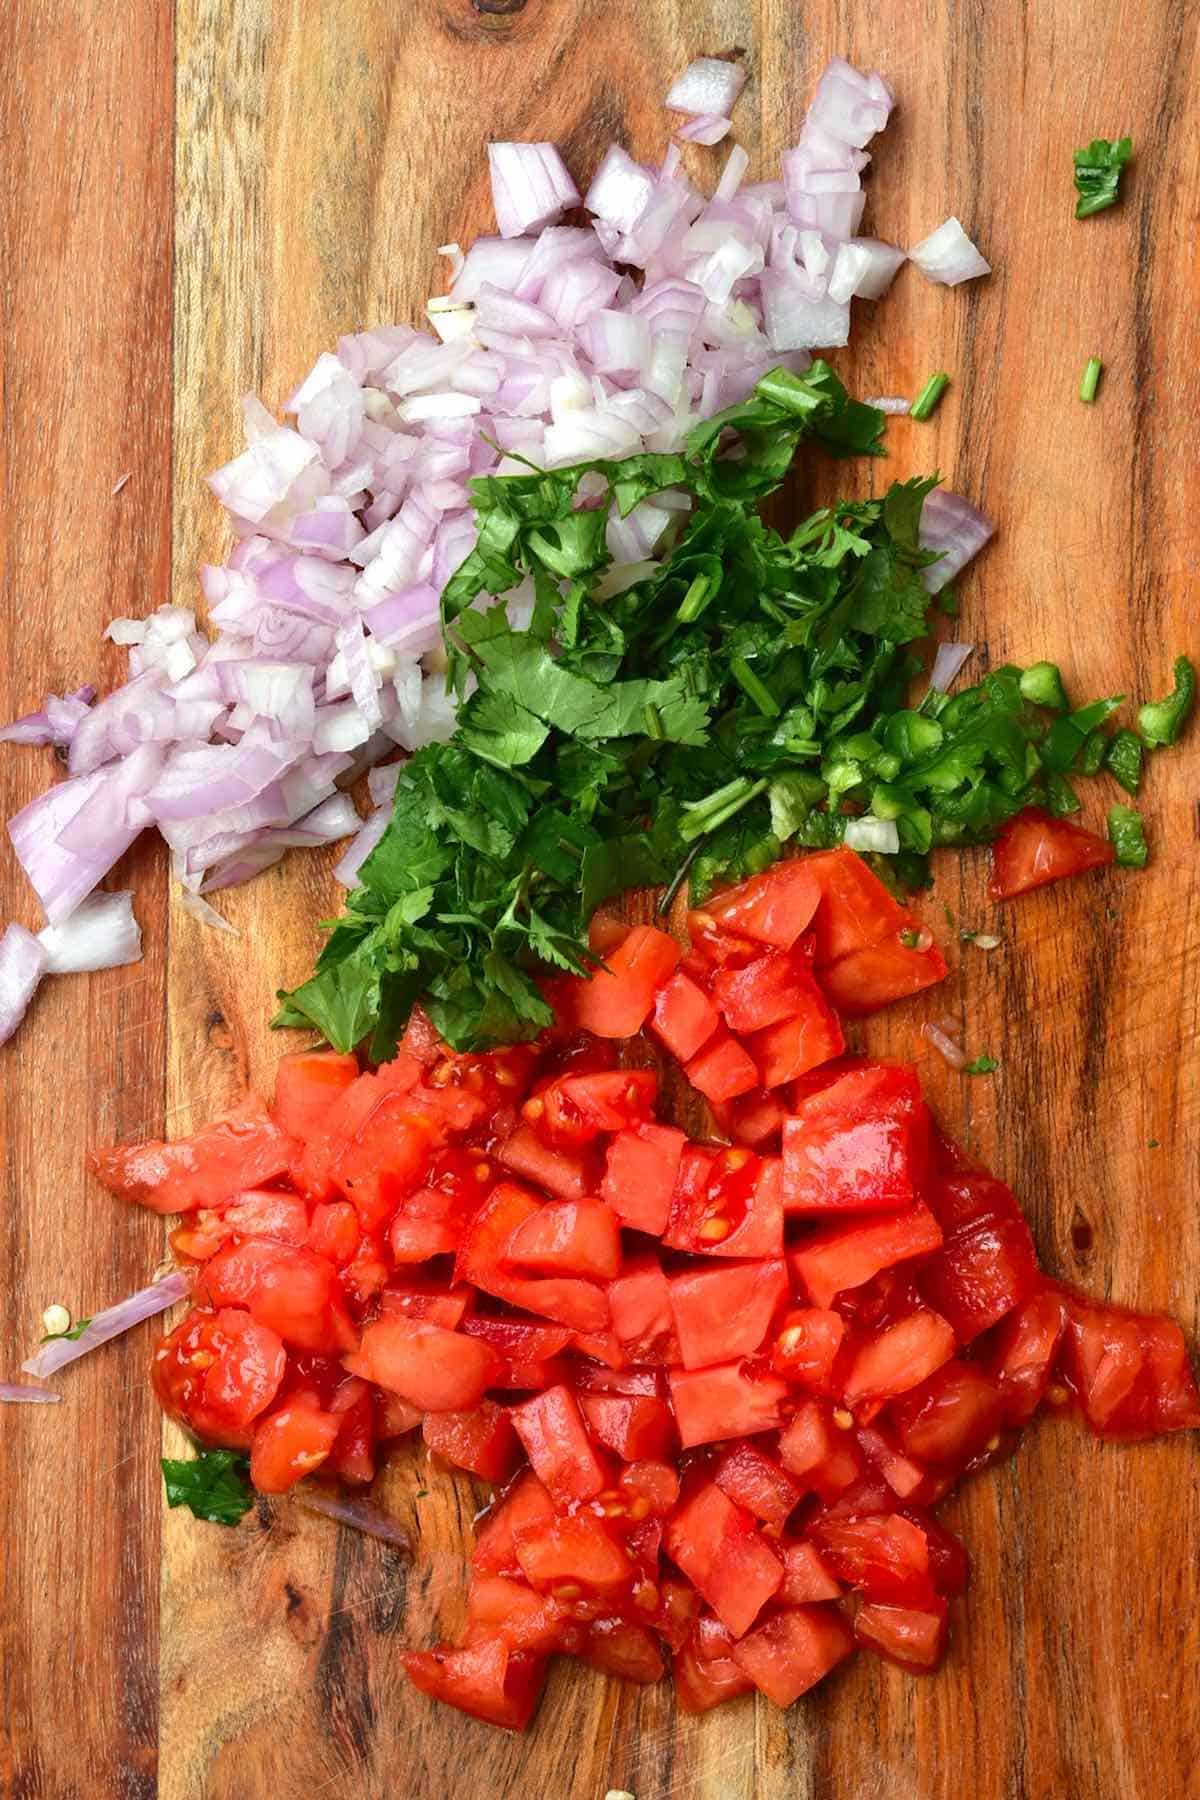 Chopped onion, cilantro, and tomato